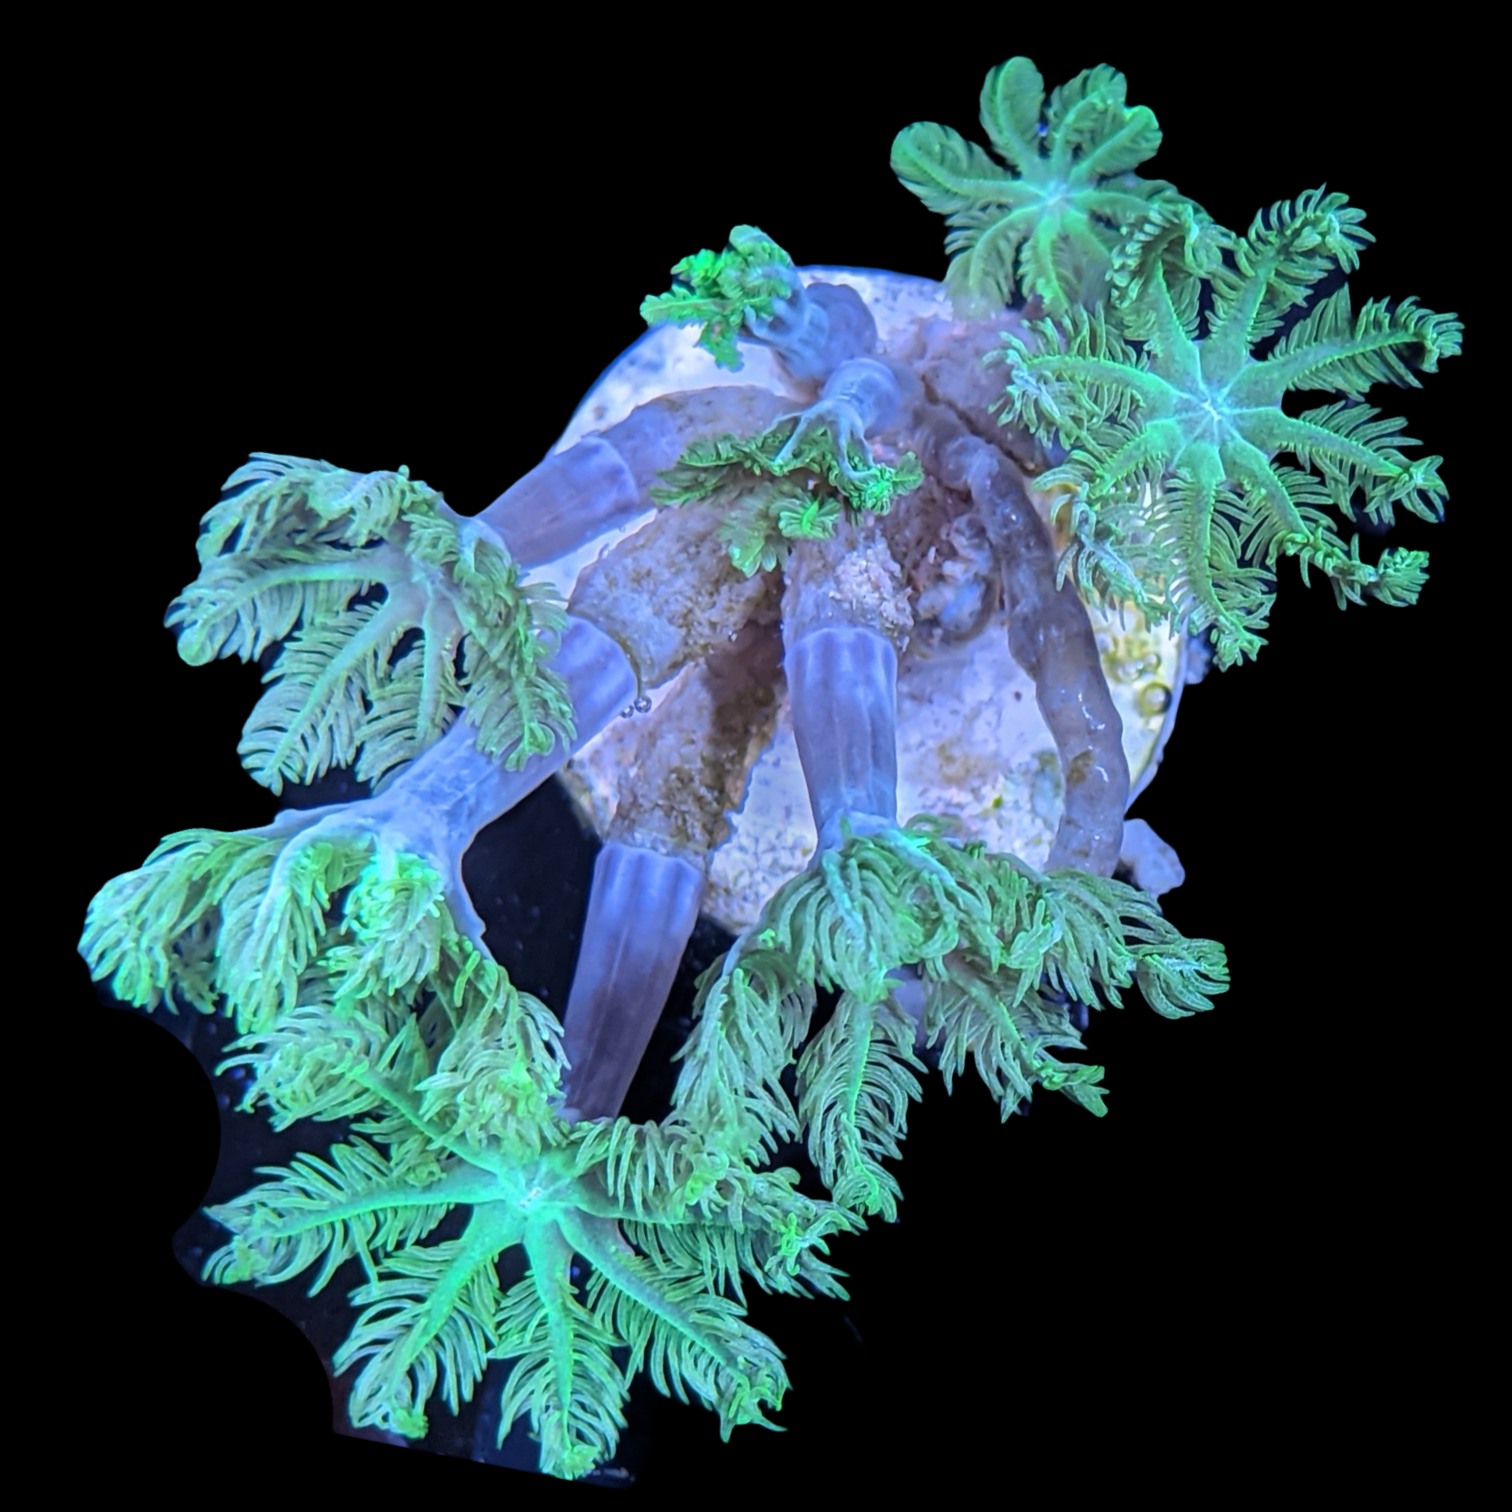 Aquacultured Indonesian Clove polyps